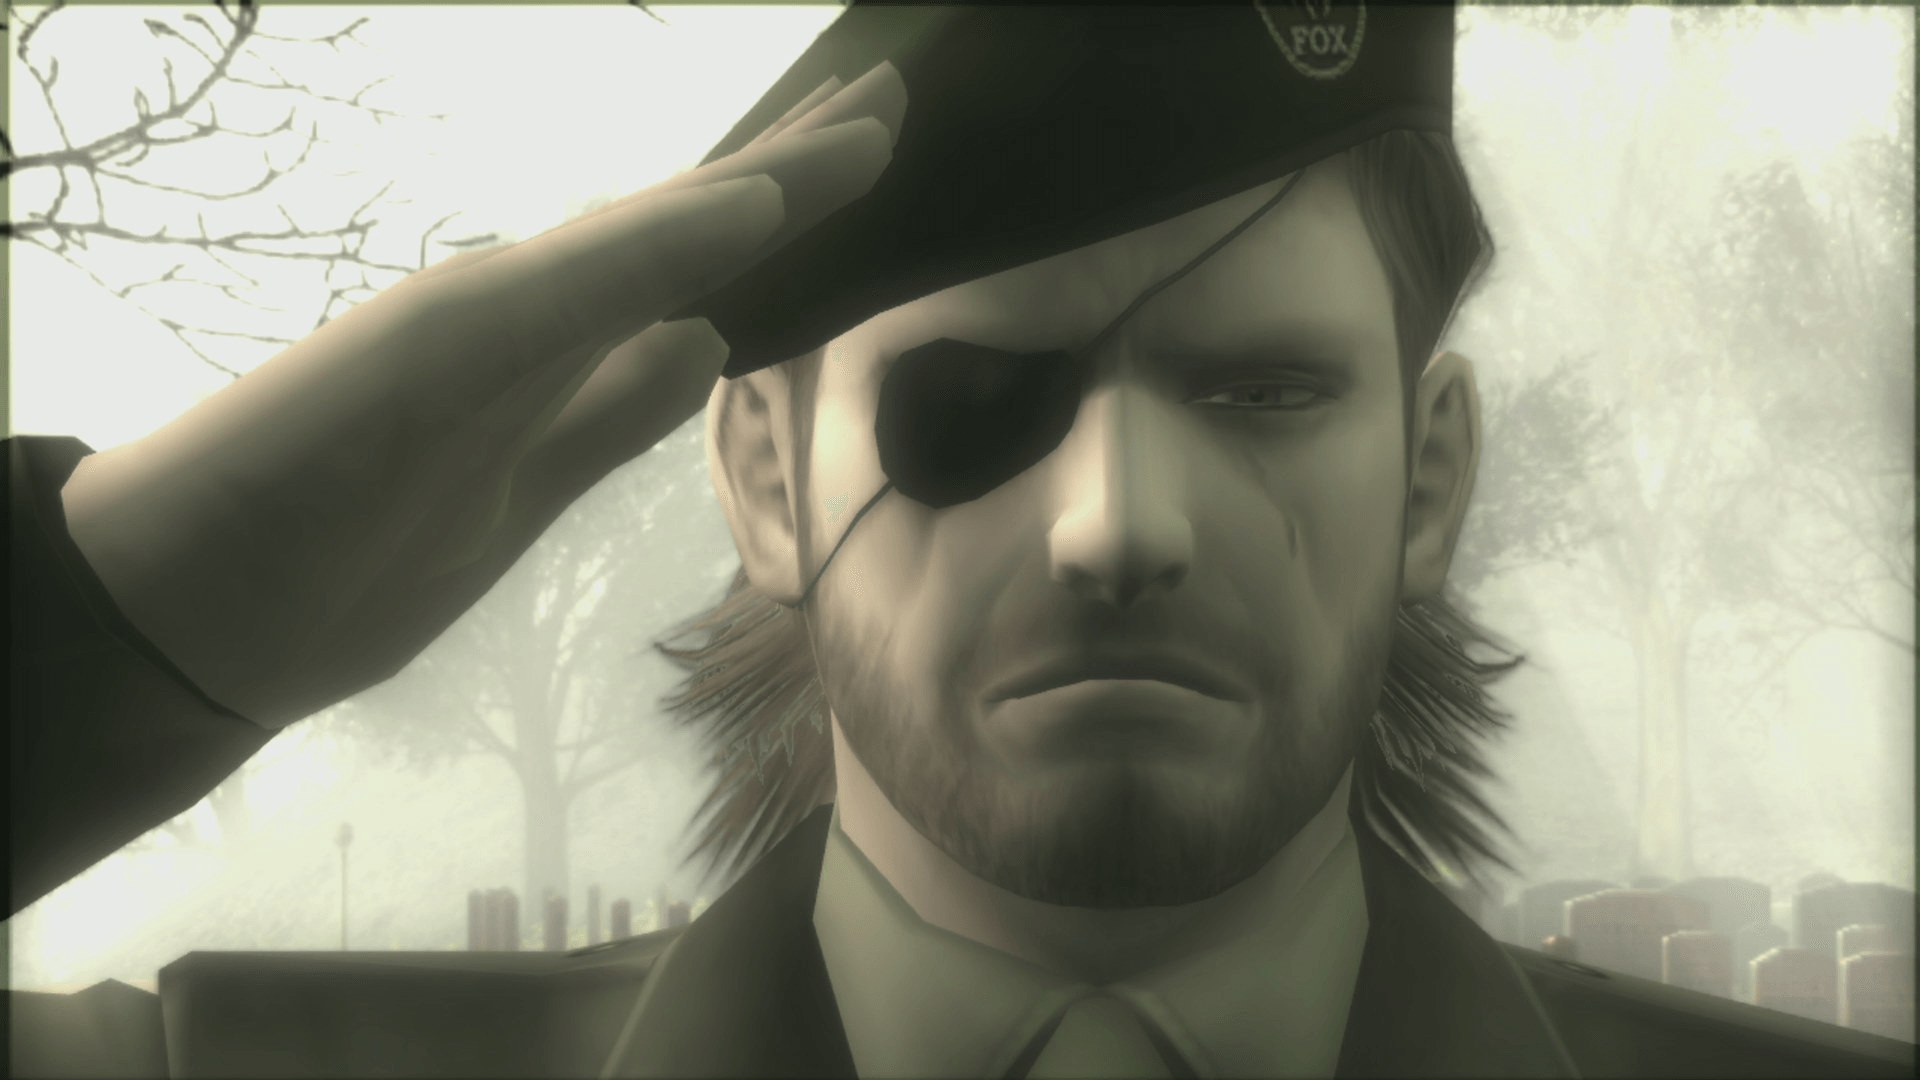 Metal Gear Solid 3 Snake Eater jogo playstation ps2